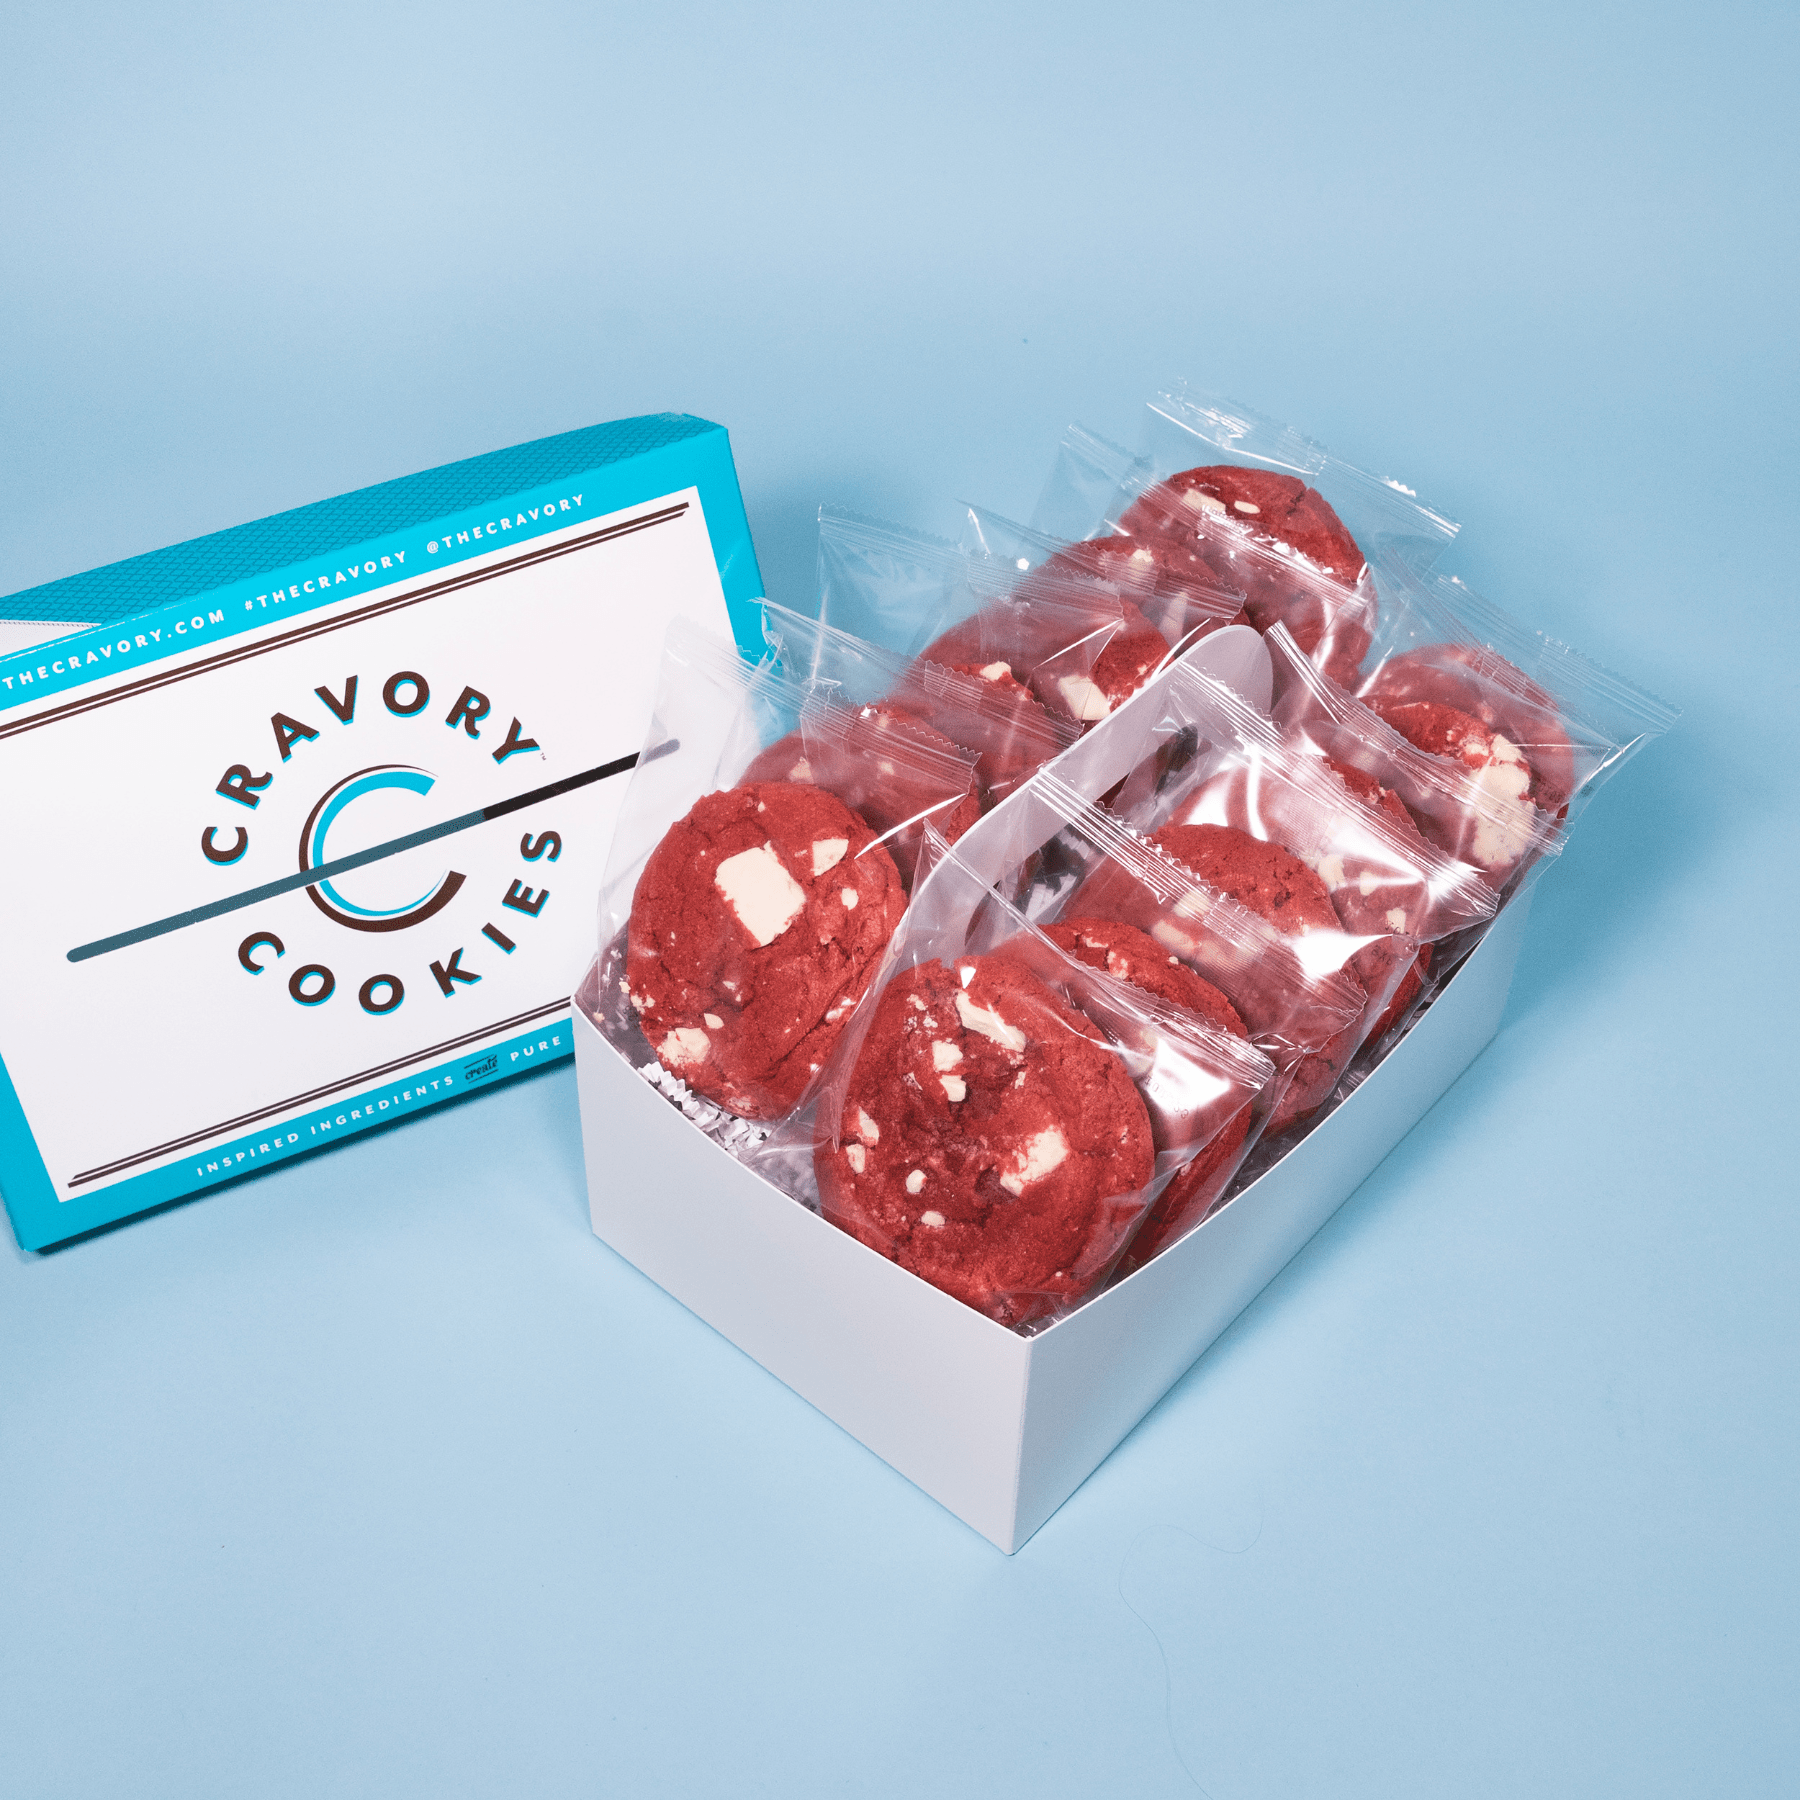 Red Velvet Cookies in box